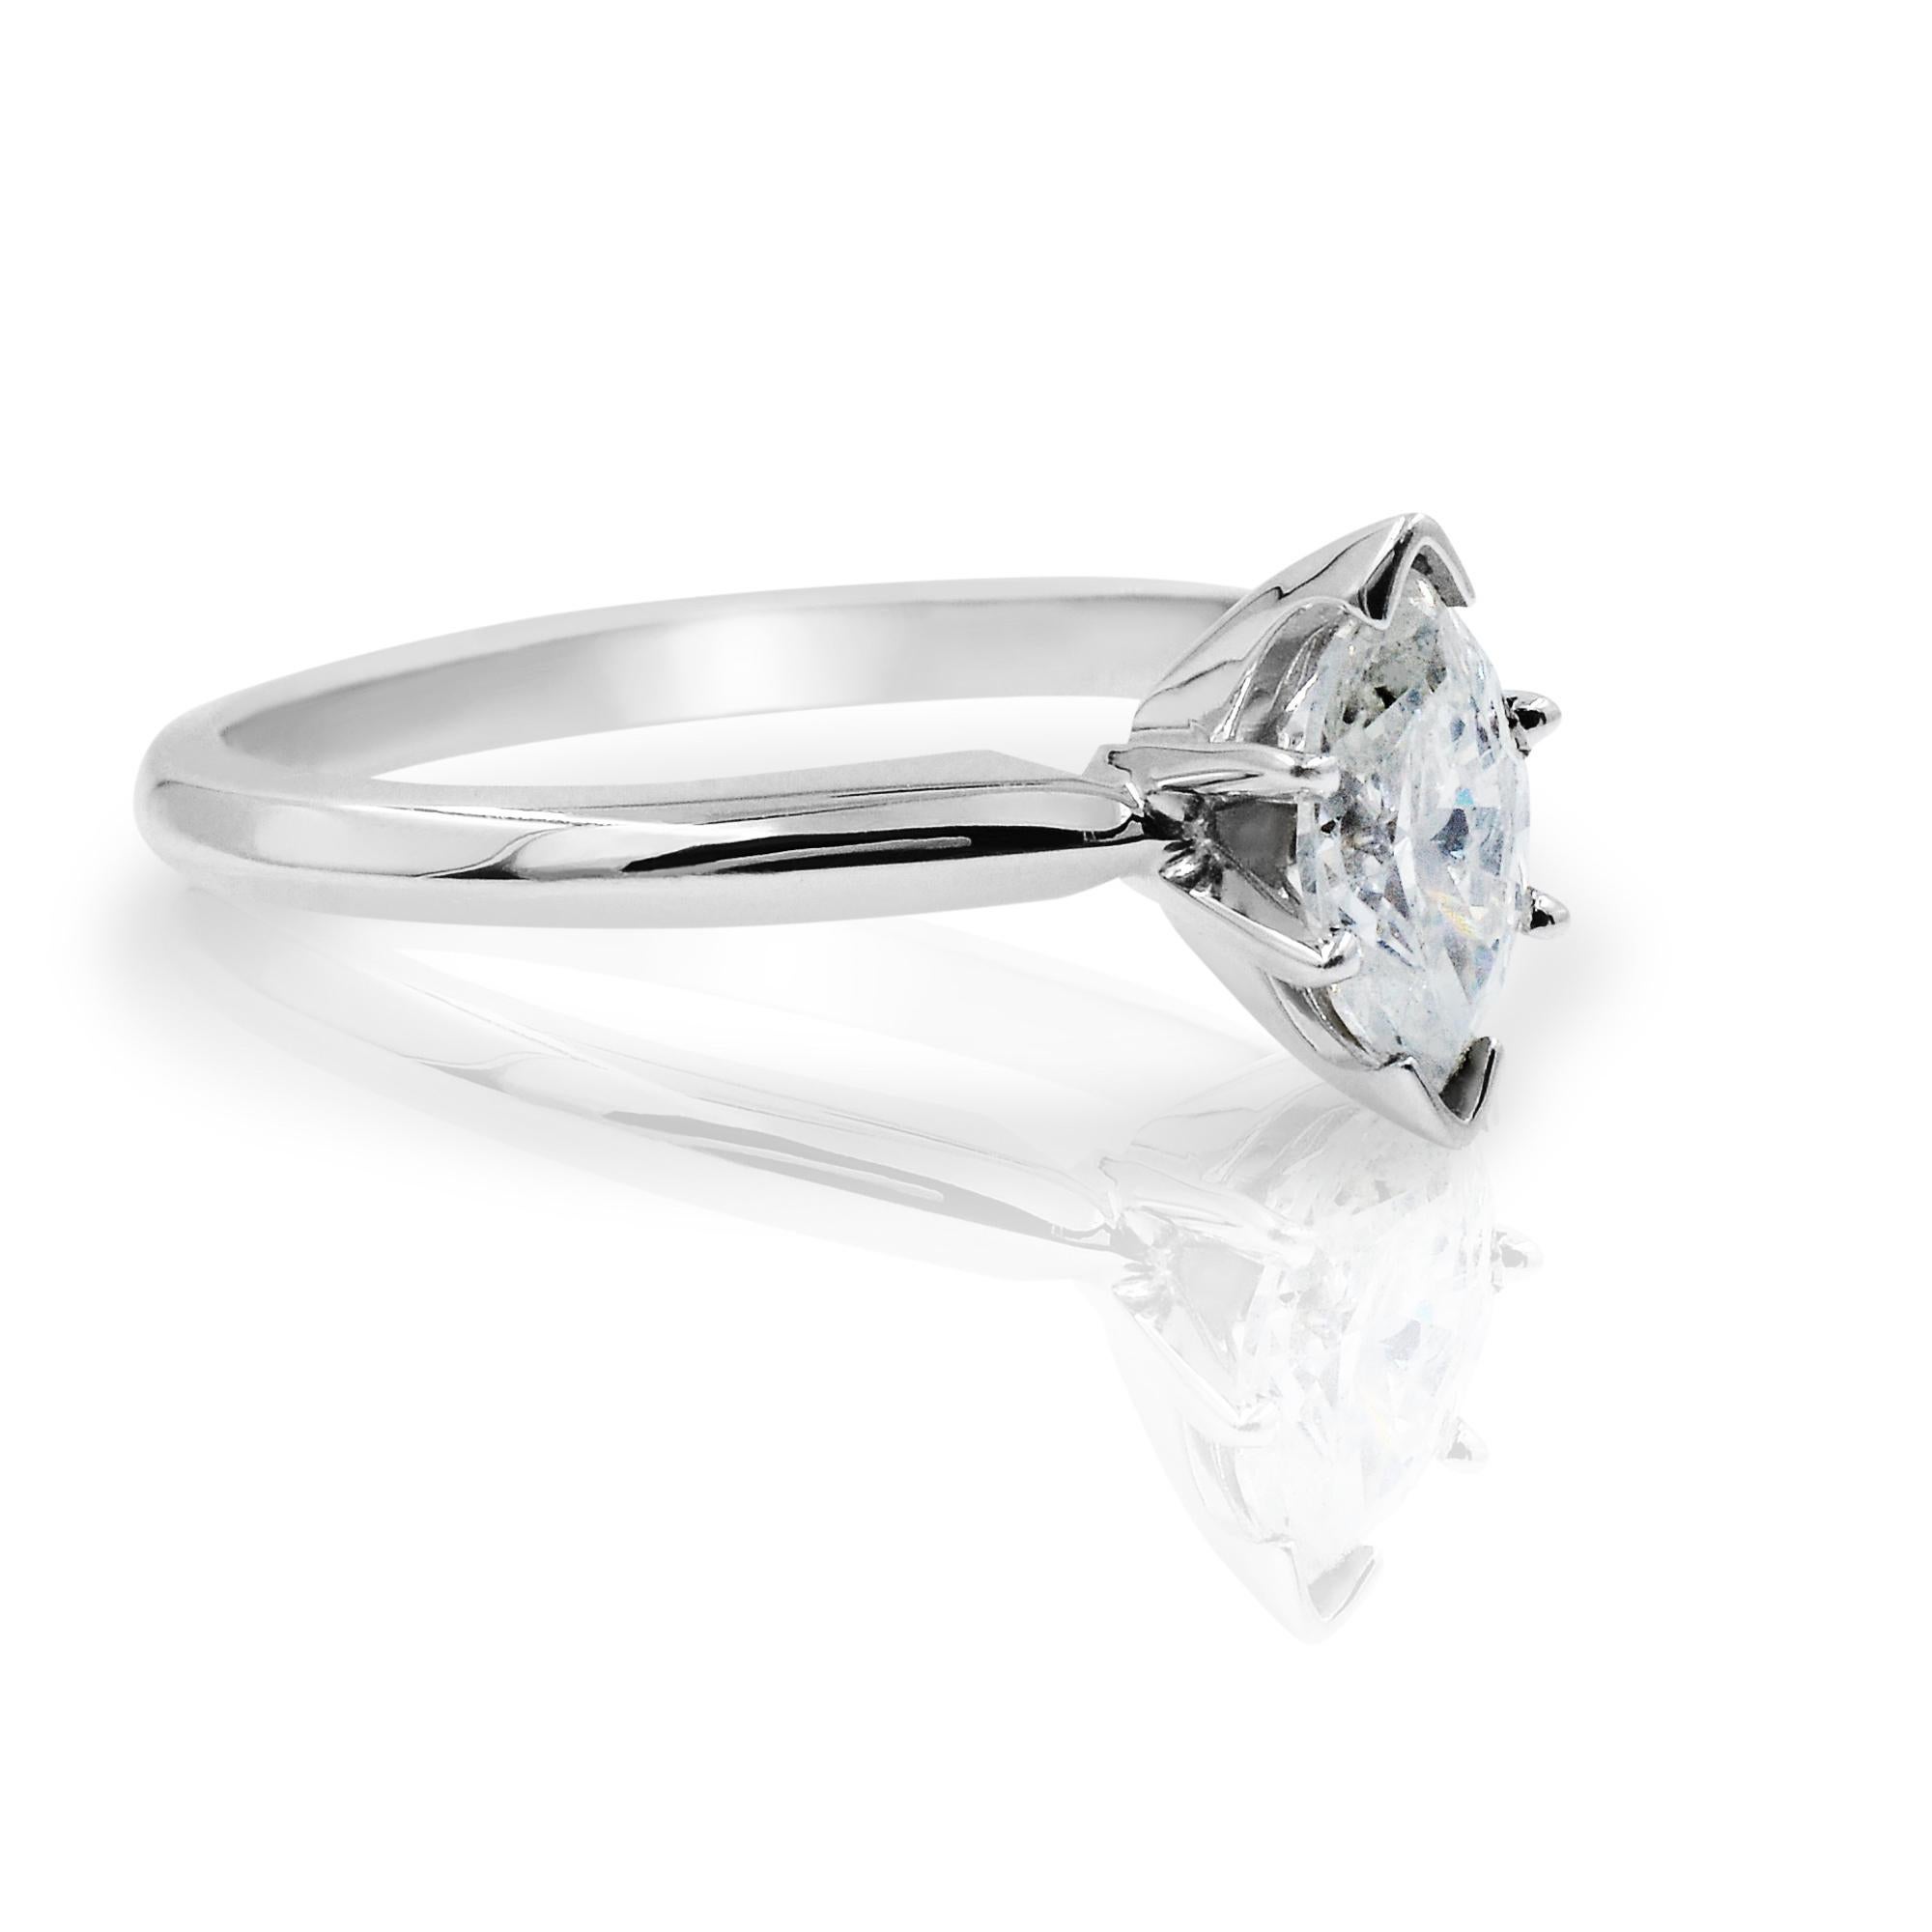 Modern Rachel Koen Marquise Cut Diamond Engagement Ring 14K White Gold 0.53Cttw For Sale